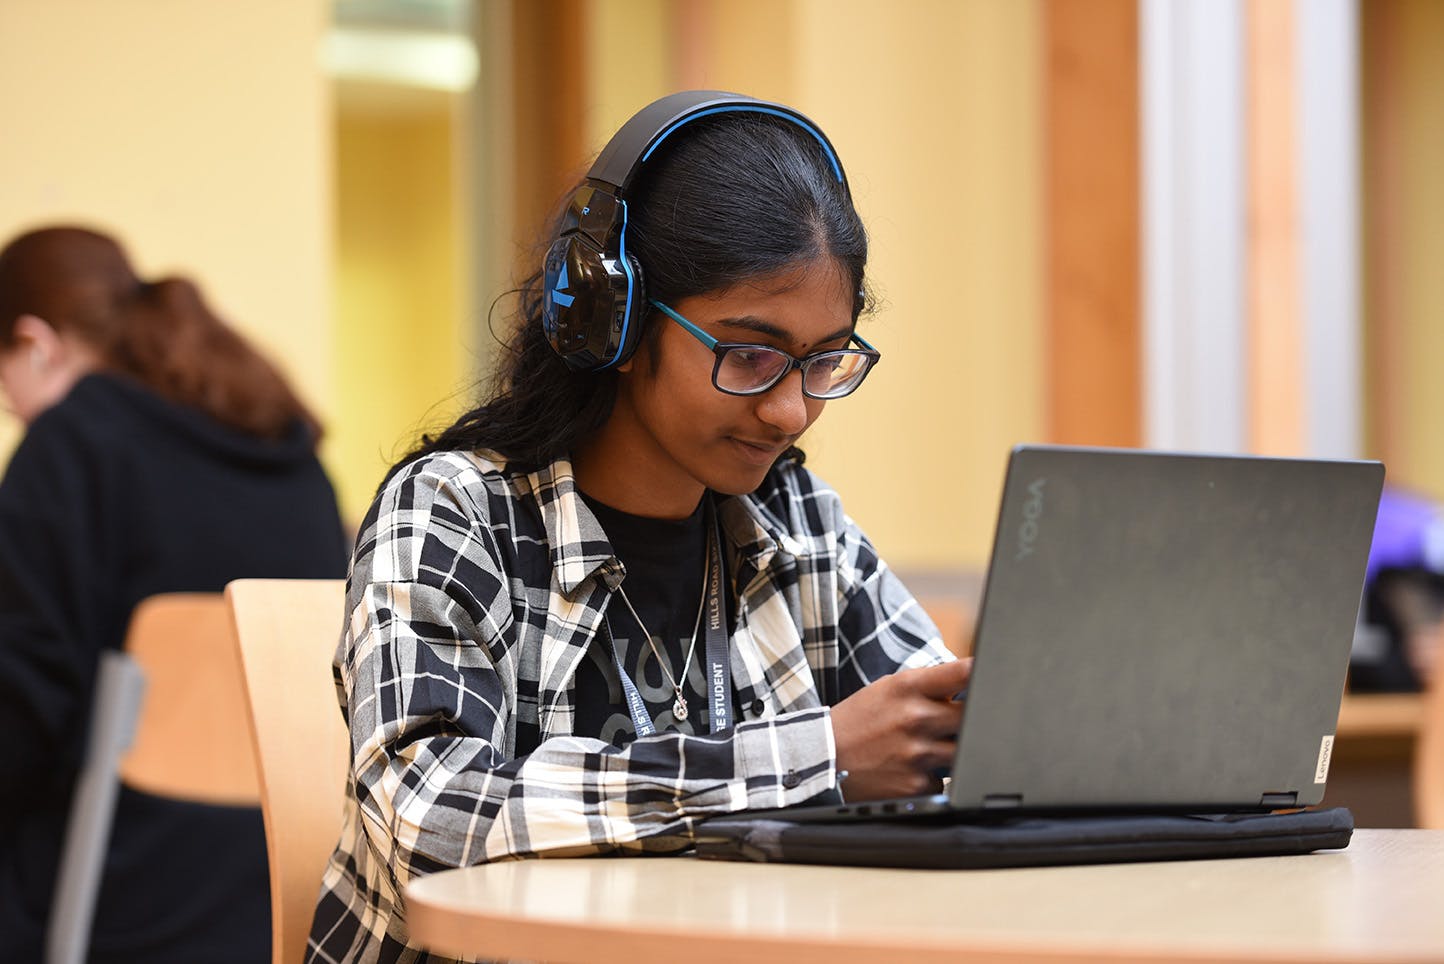 Student wearing headphones in front of laptop